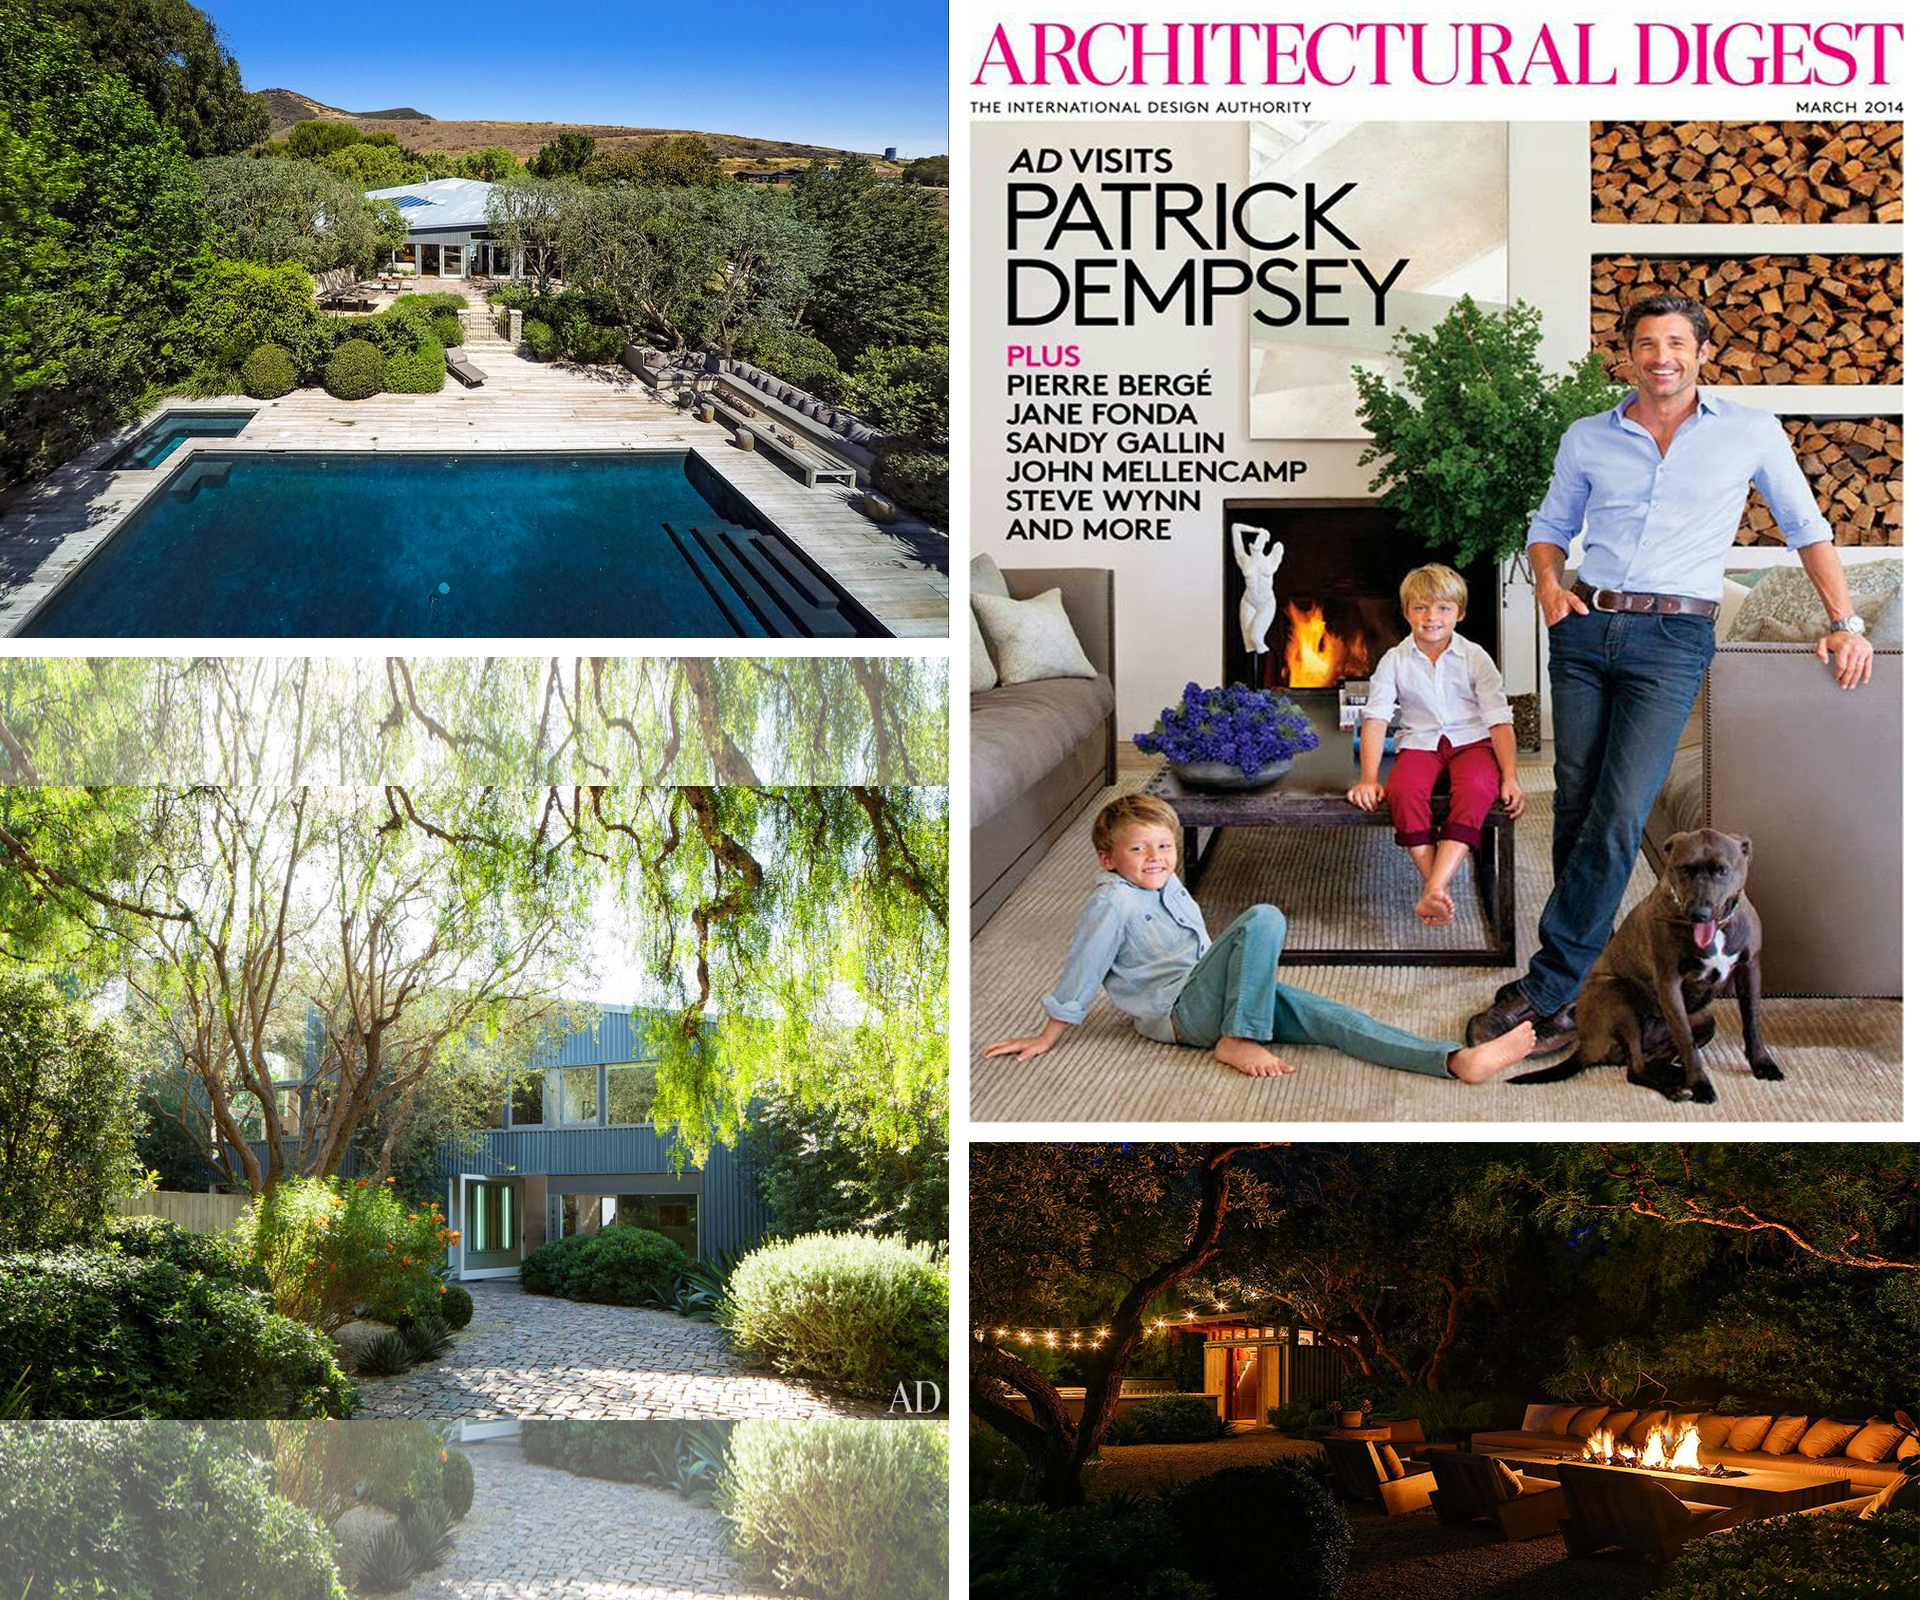 Patrick Dempsey’s ‘McDreamy’ Malibu home for sale